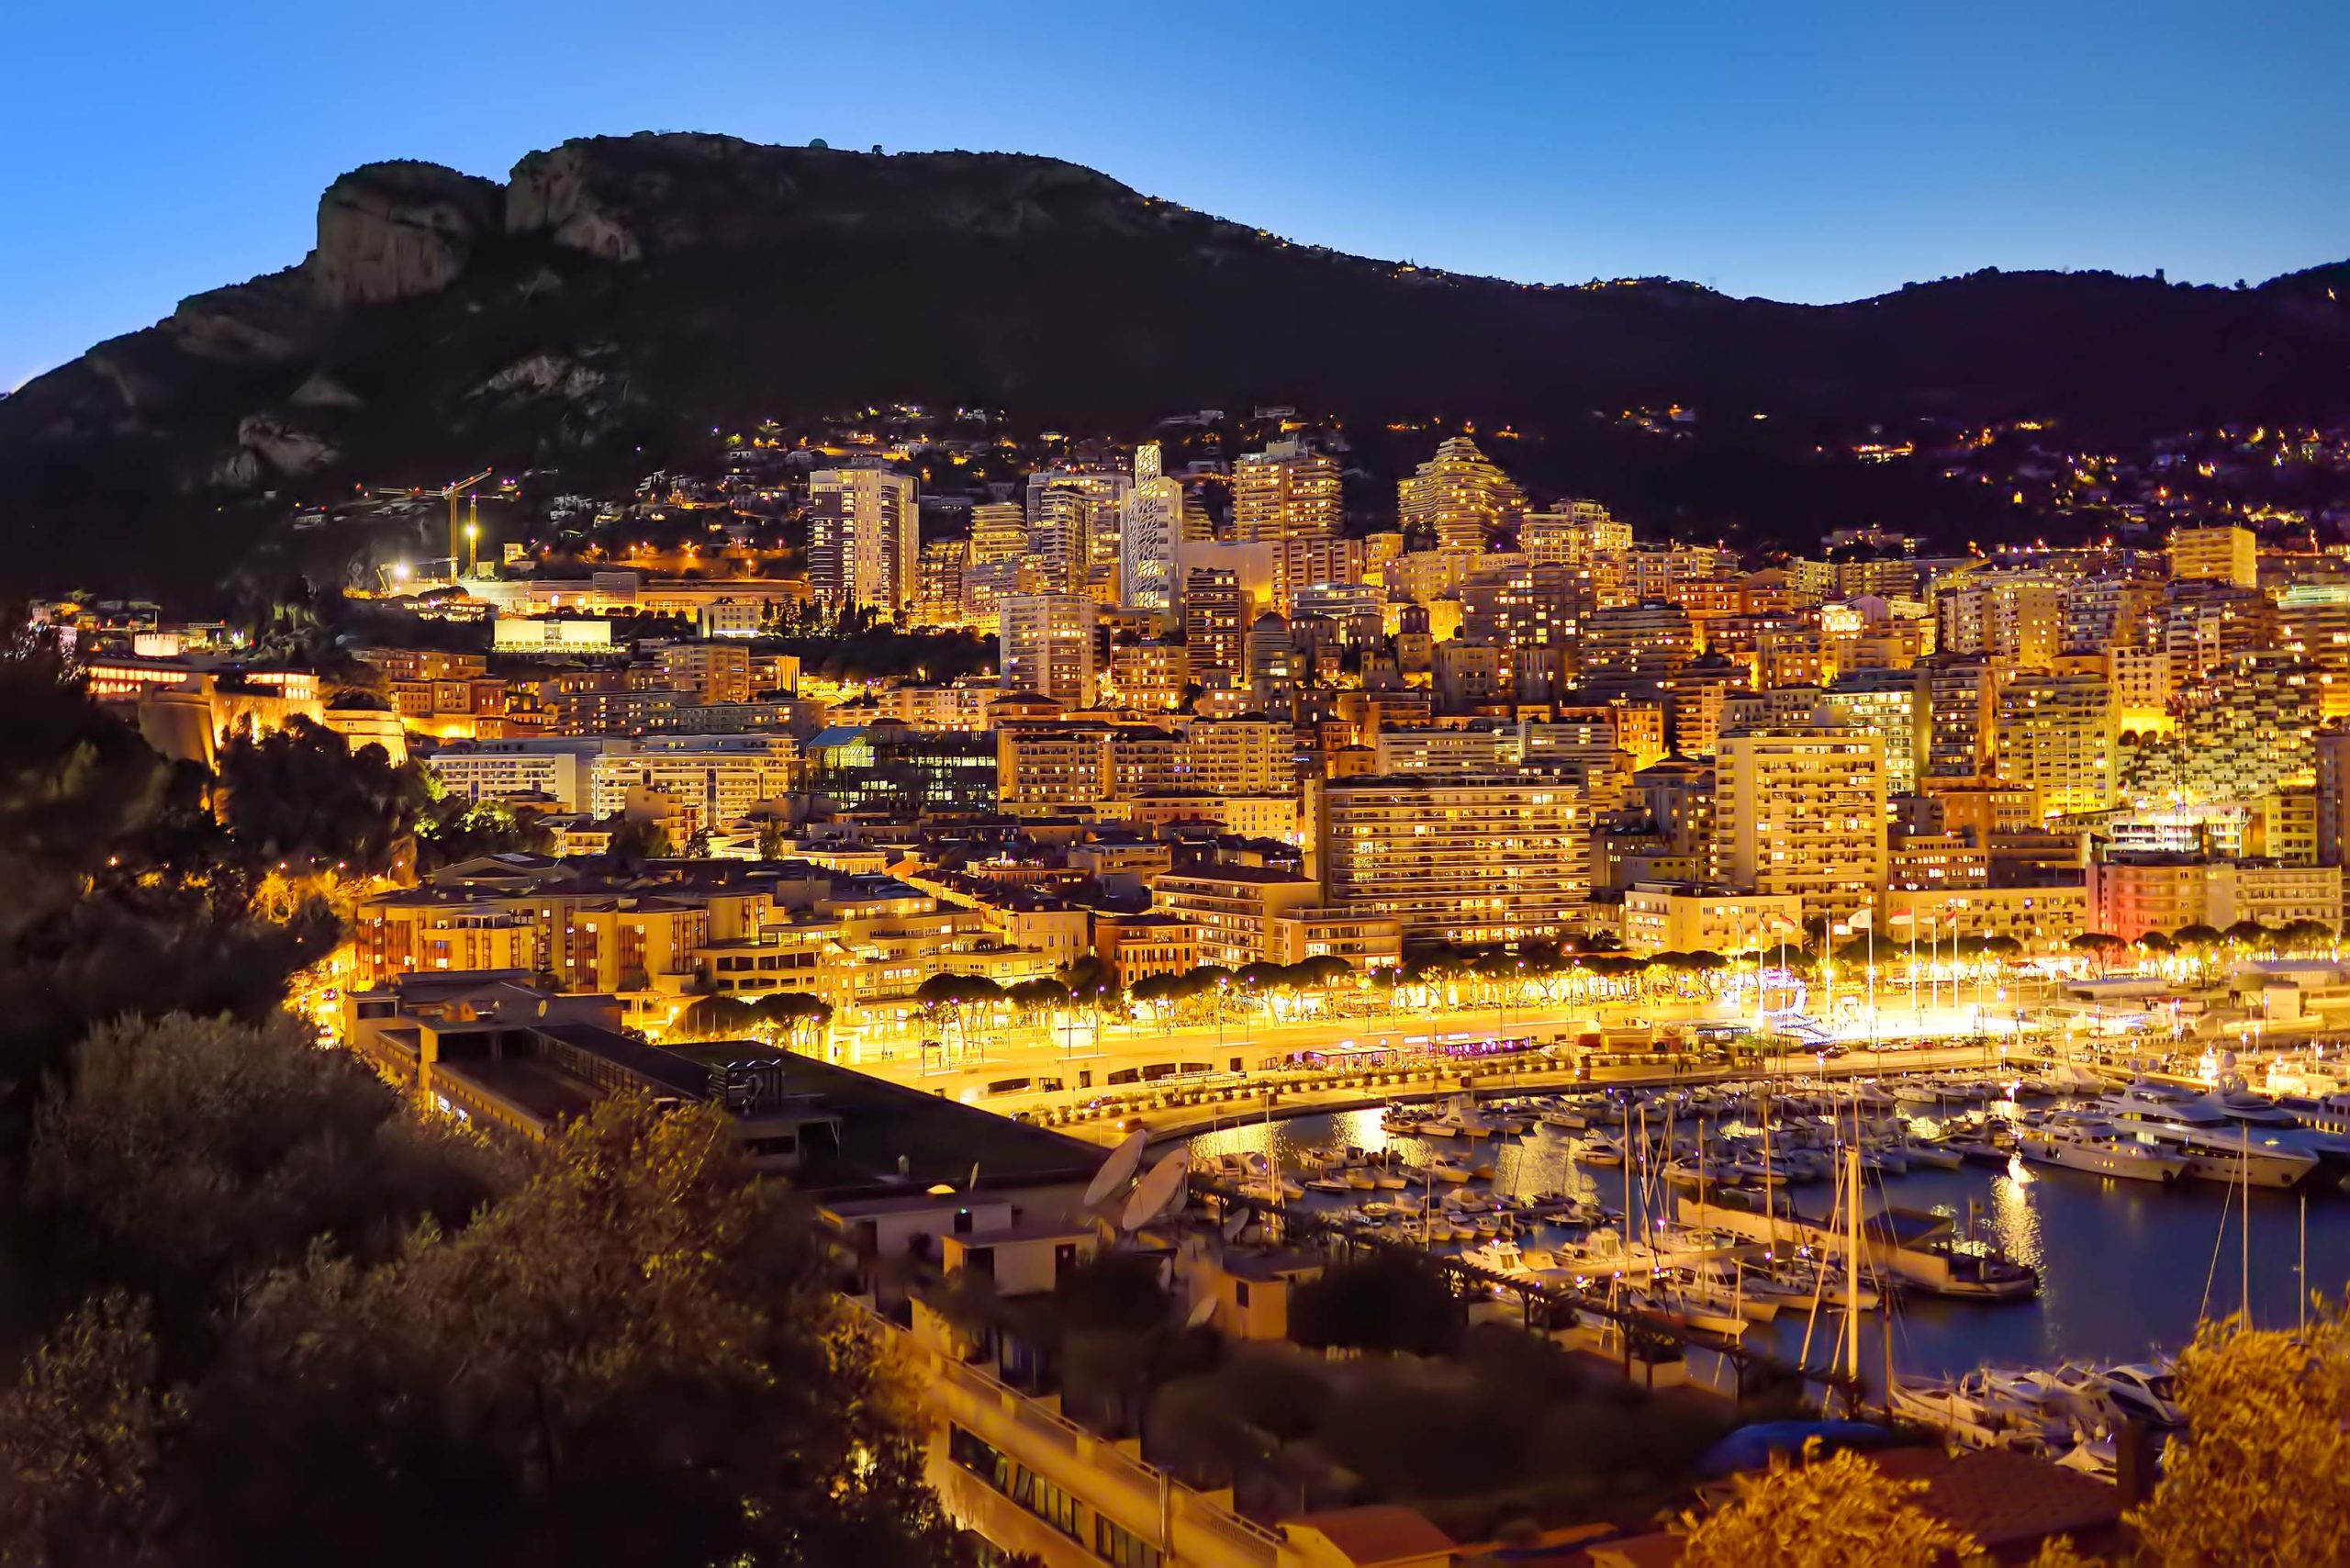 Monaco by night. Photo: Maria_Sbytova via Envato Elements